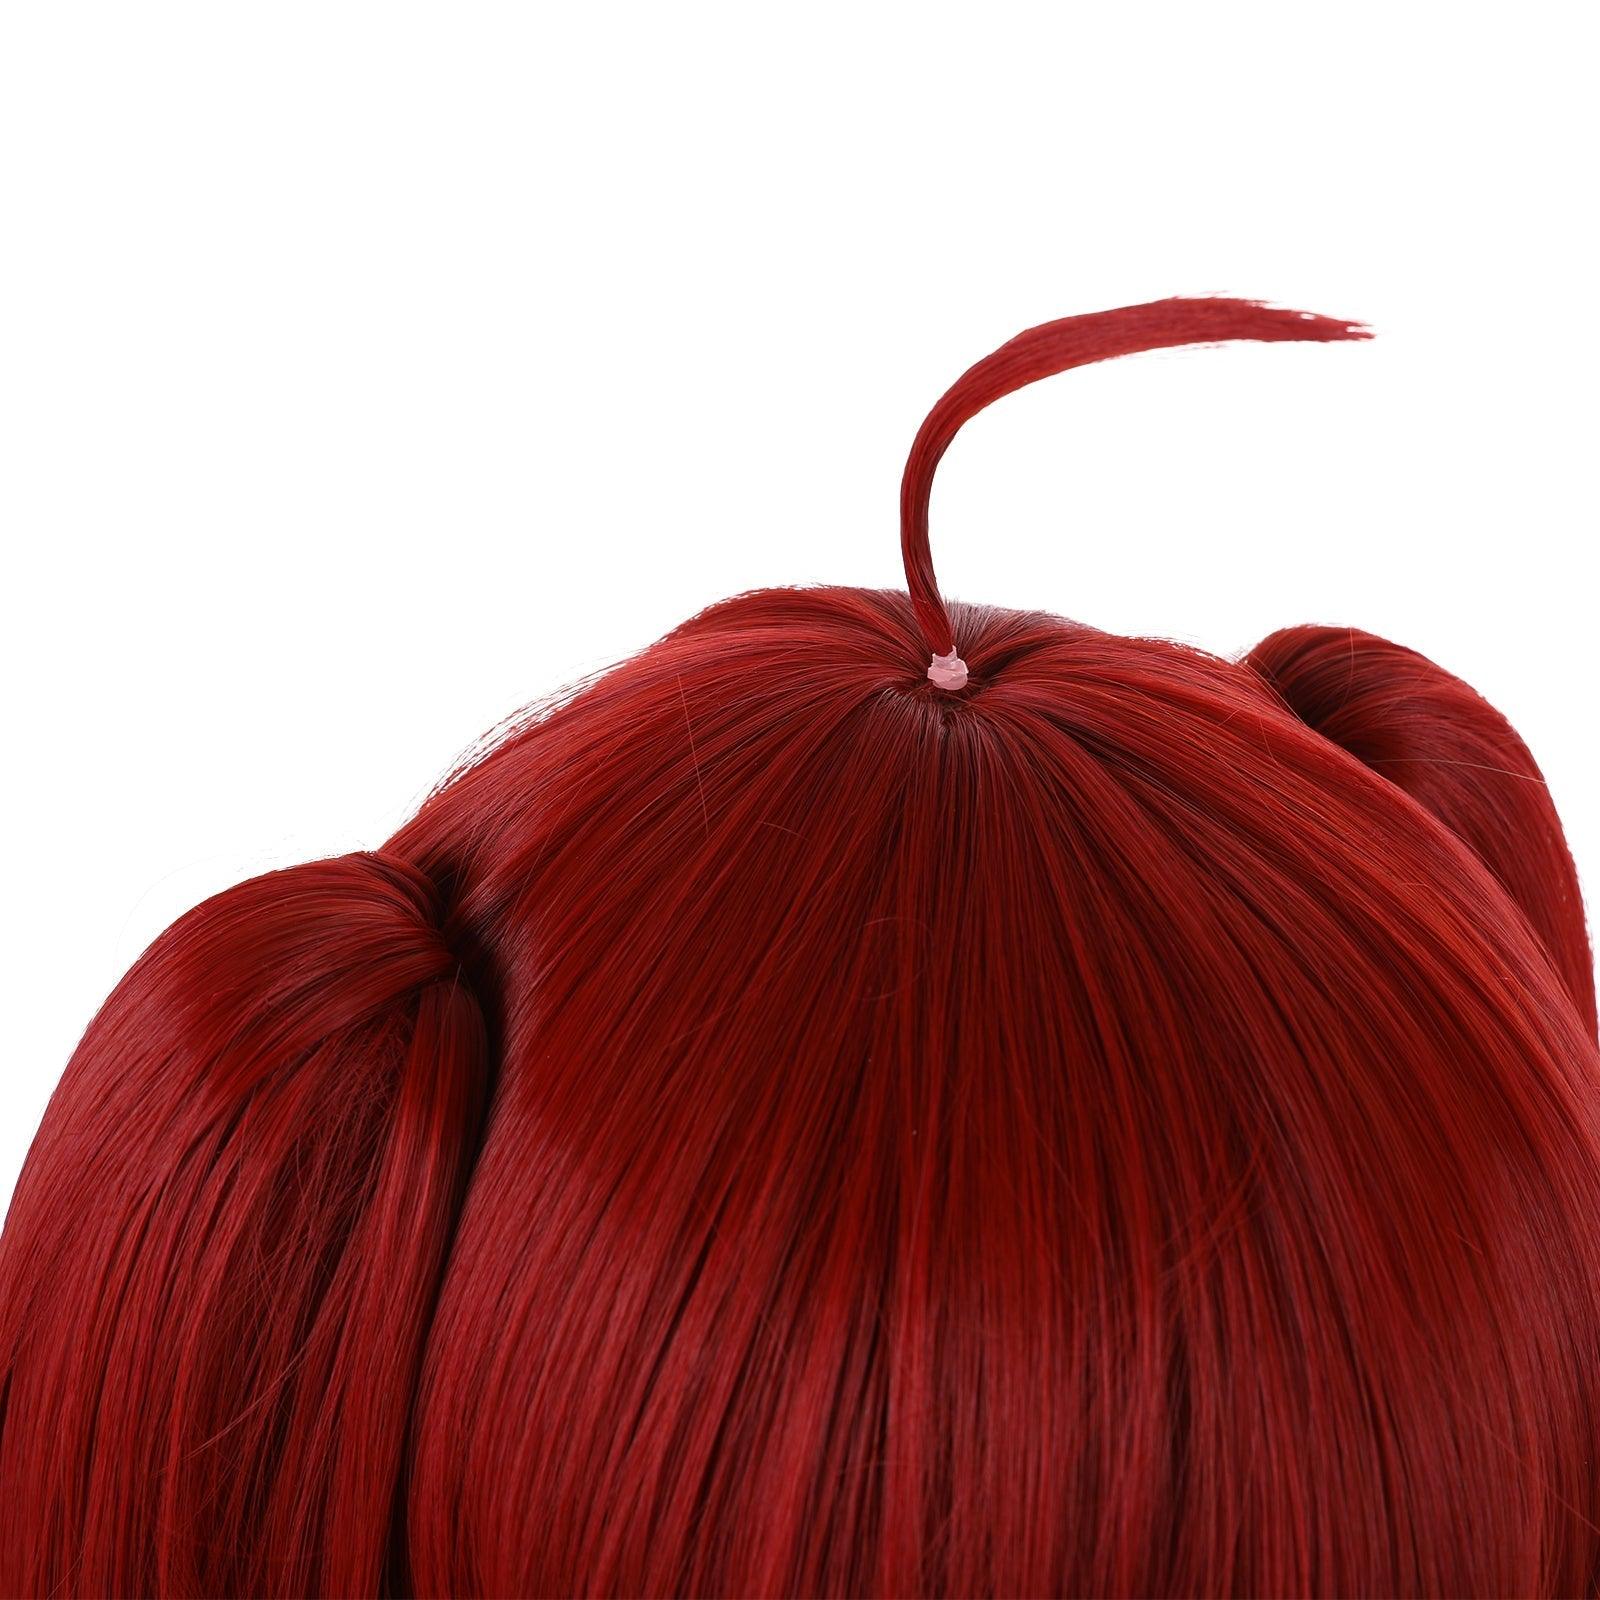 Anime Cosplay Wigs for Iris red Cosplay Wig of Shikkakumon no Saikyokenja 533D - coscrew